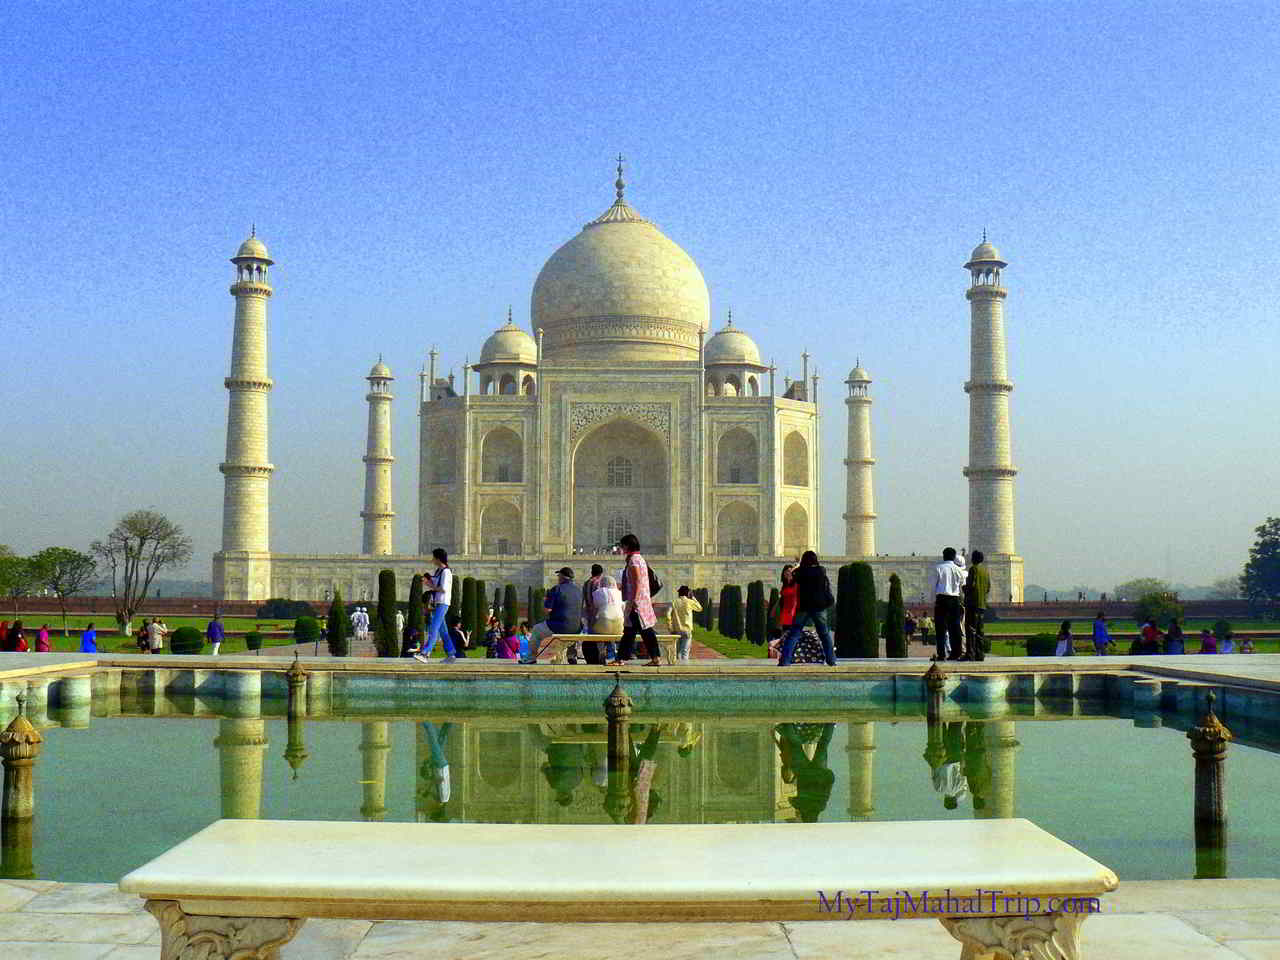 Taj Mahal Hd Wallpaper Wallpapersafari